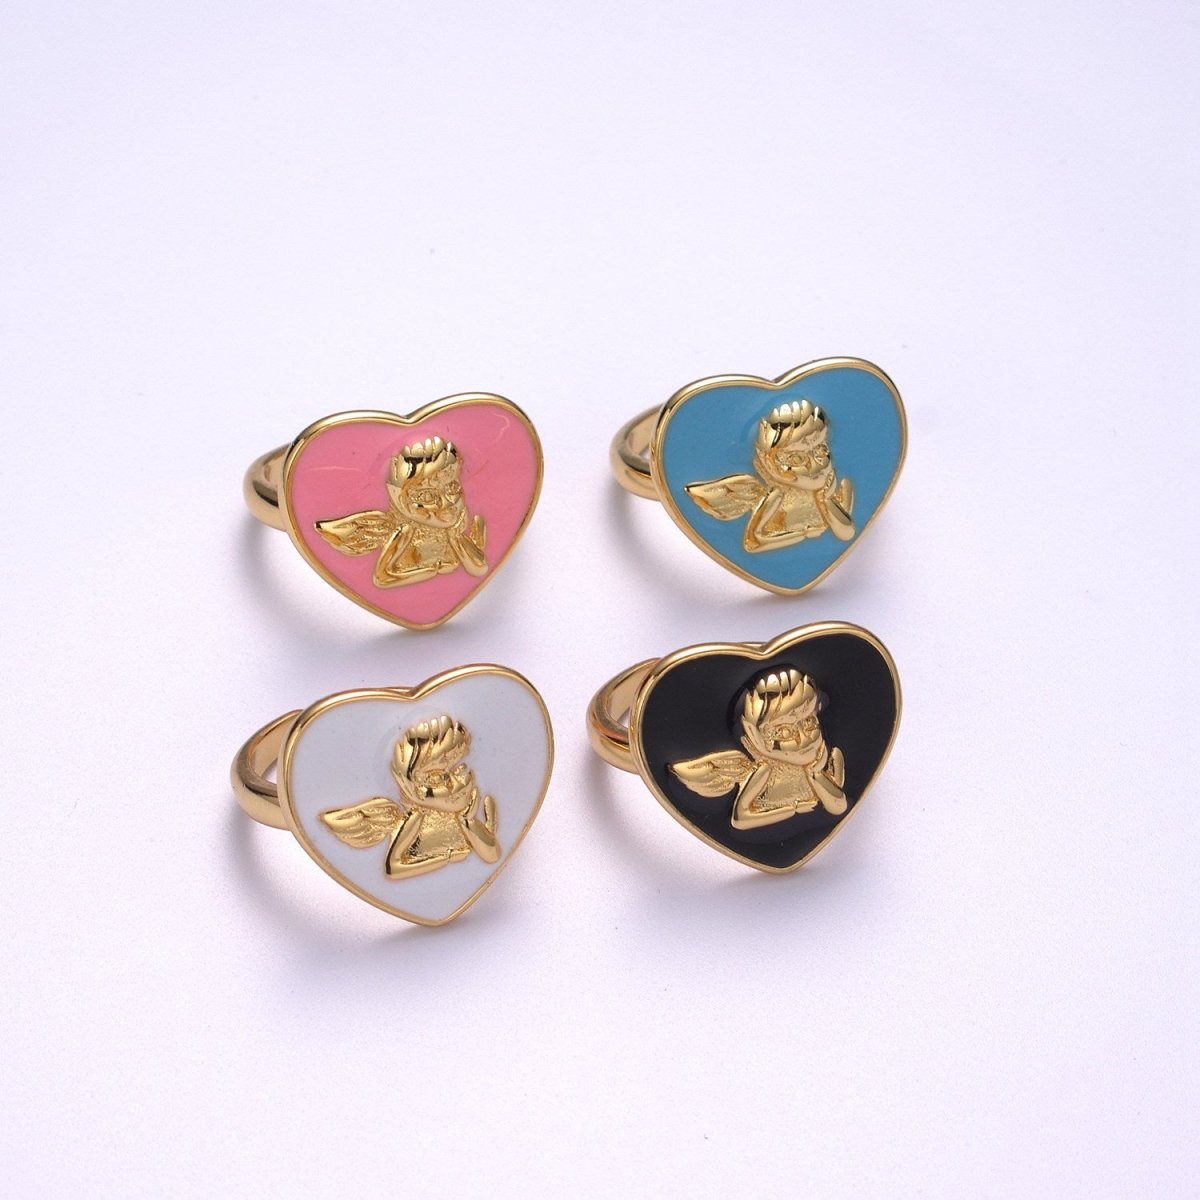 Chunky Cherub Angel Ring Statement Ring Gold Open Adjustable Ring Enamel Jewelry Valentine Gift S-225 ~ S-228 - DLUXCA